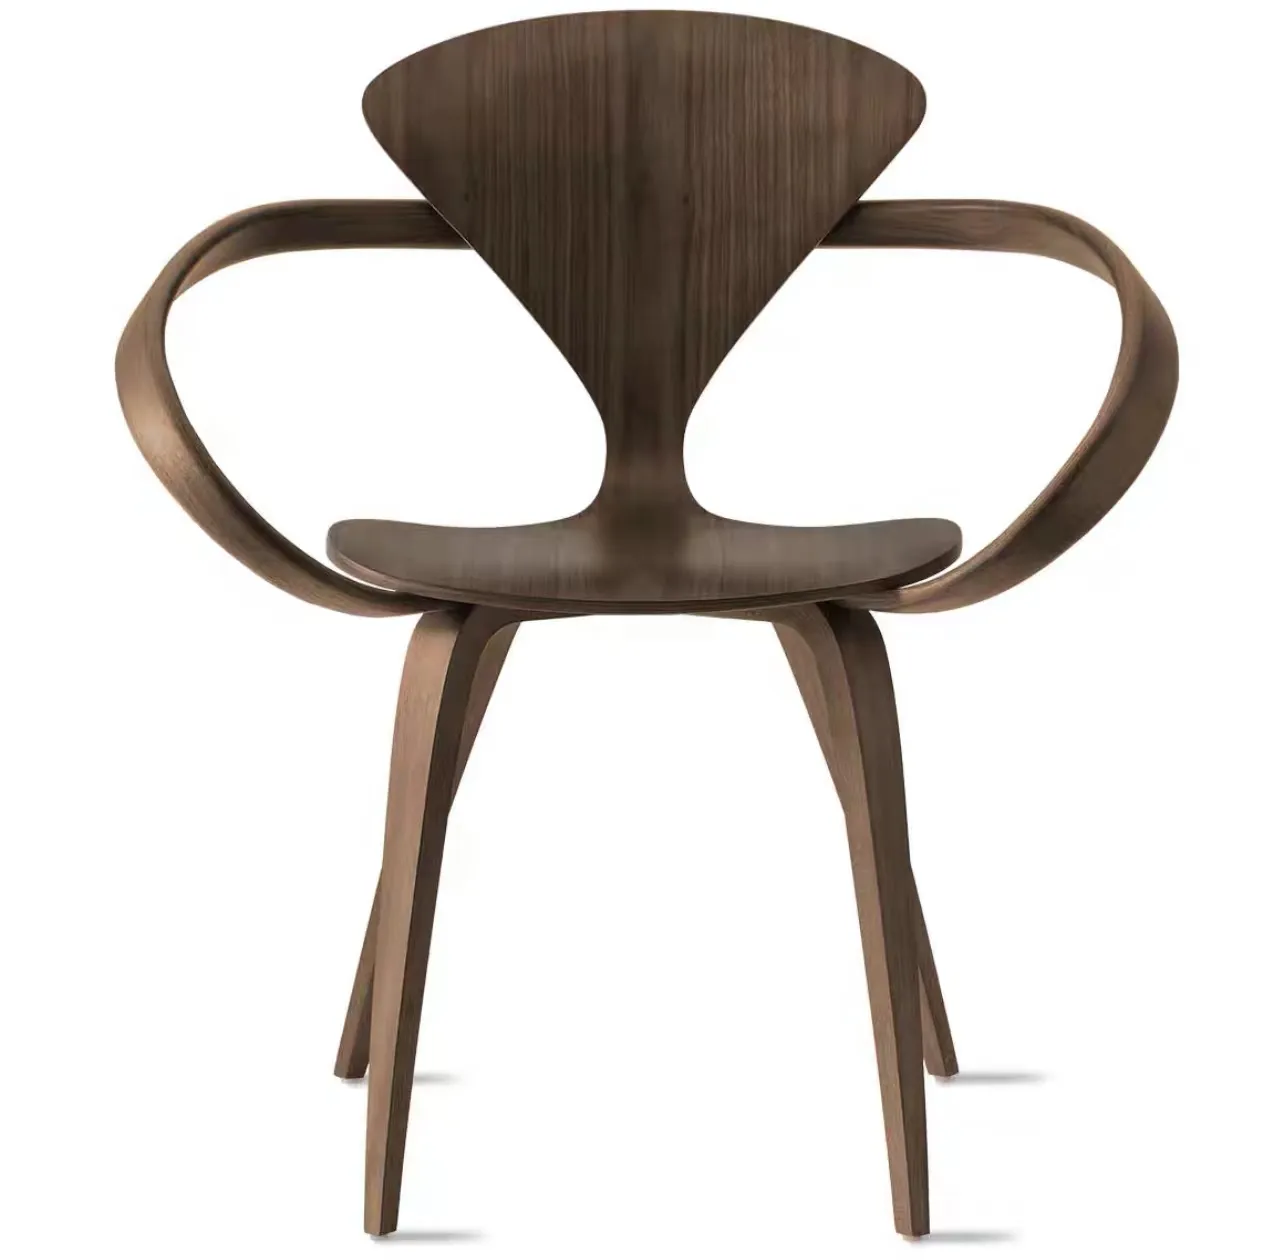 Moderne Modedesigner möbel Made in China Holz Esszimmer Walnuss Sofas tühle Büro Einzels tuhl